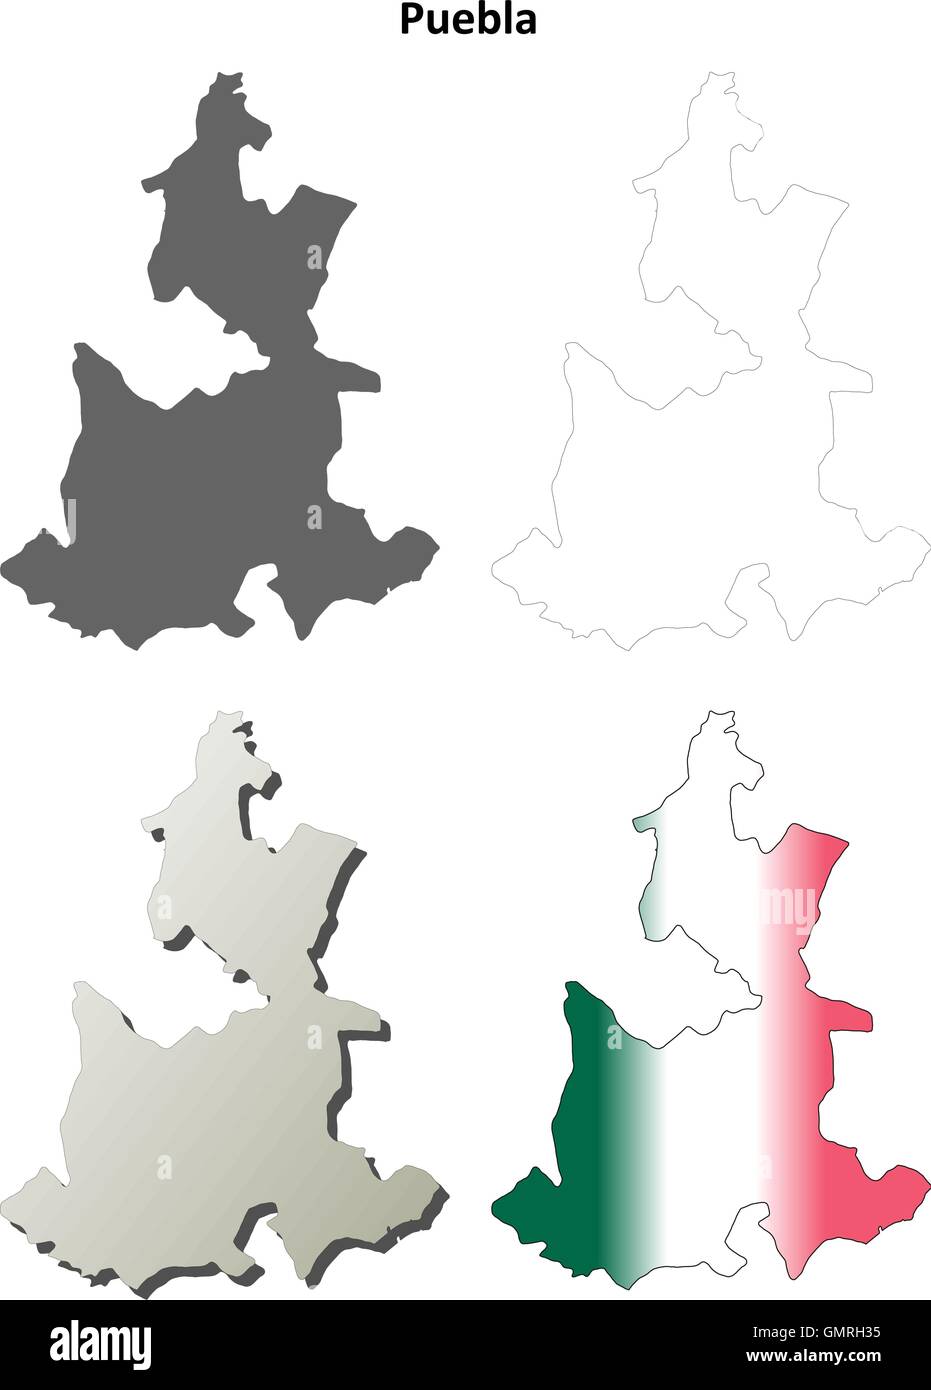 Puebla blank outline map set Stock Vector